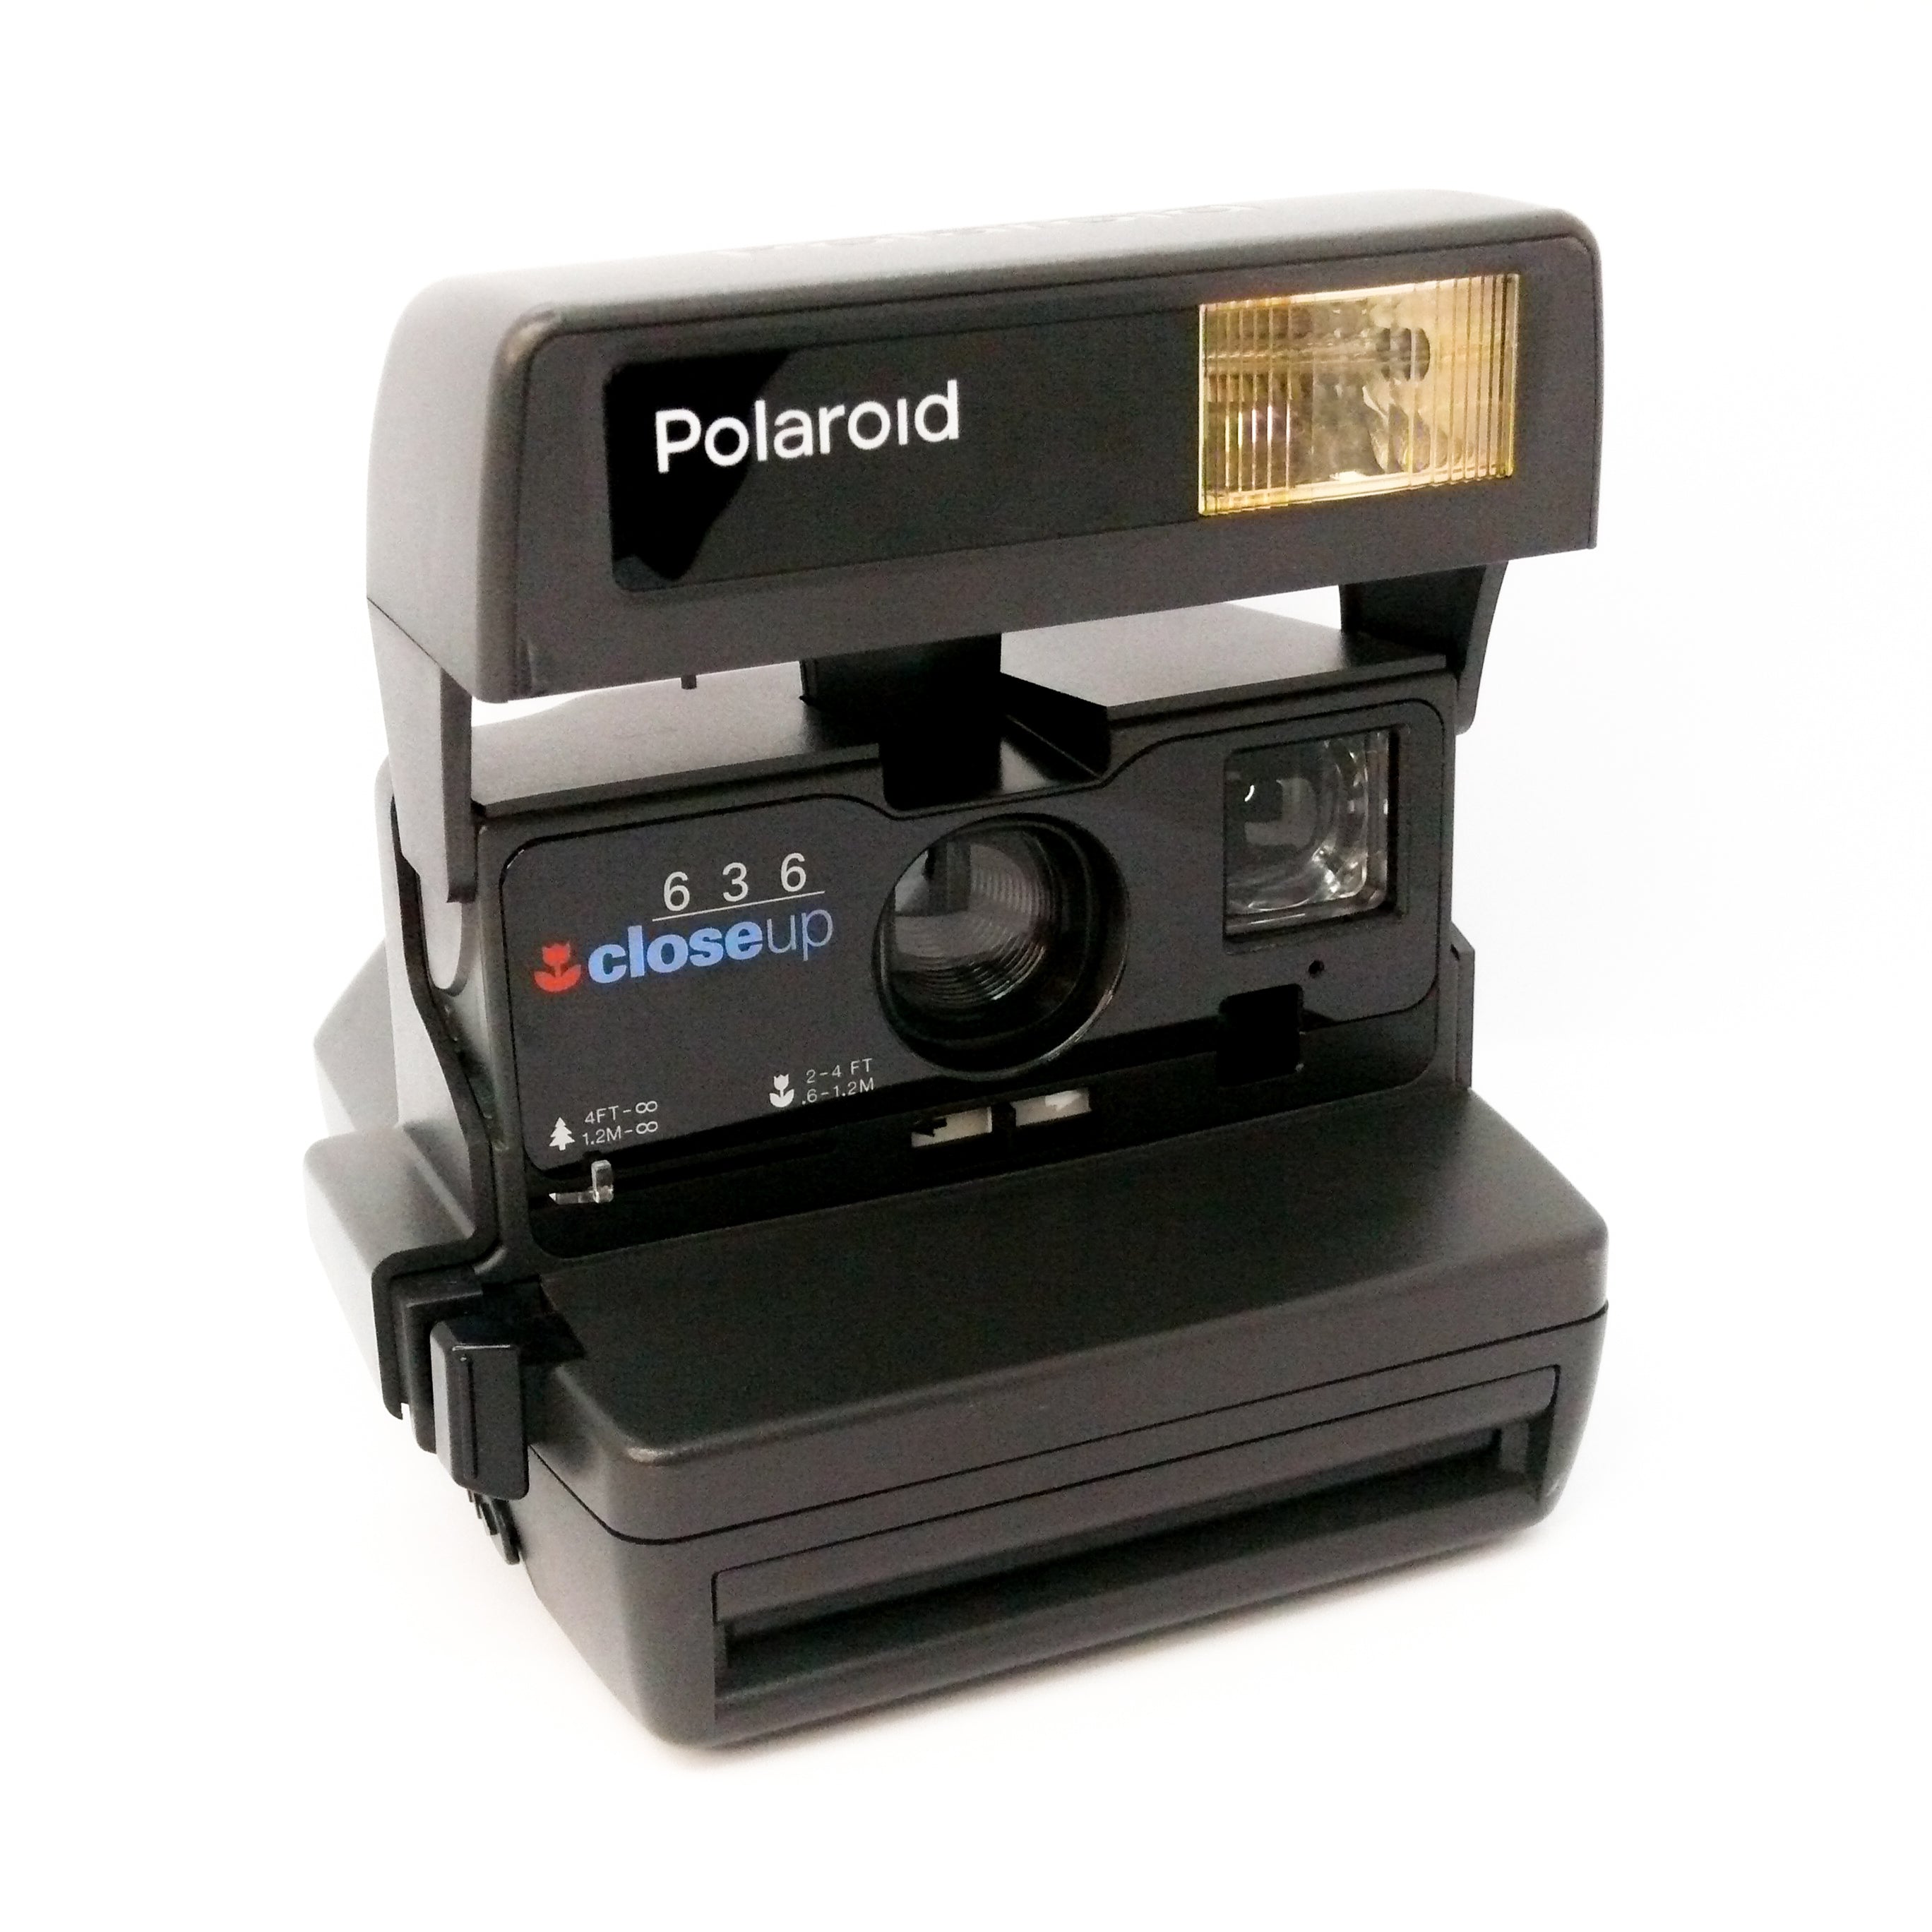 Polaroid 636 POLATALK  OneStep closeup